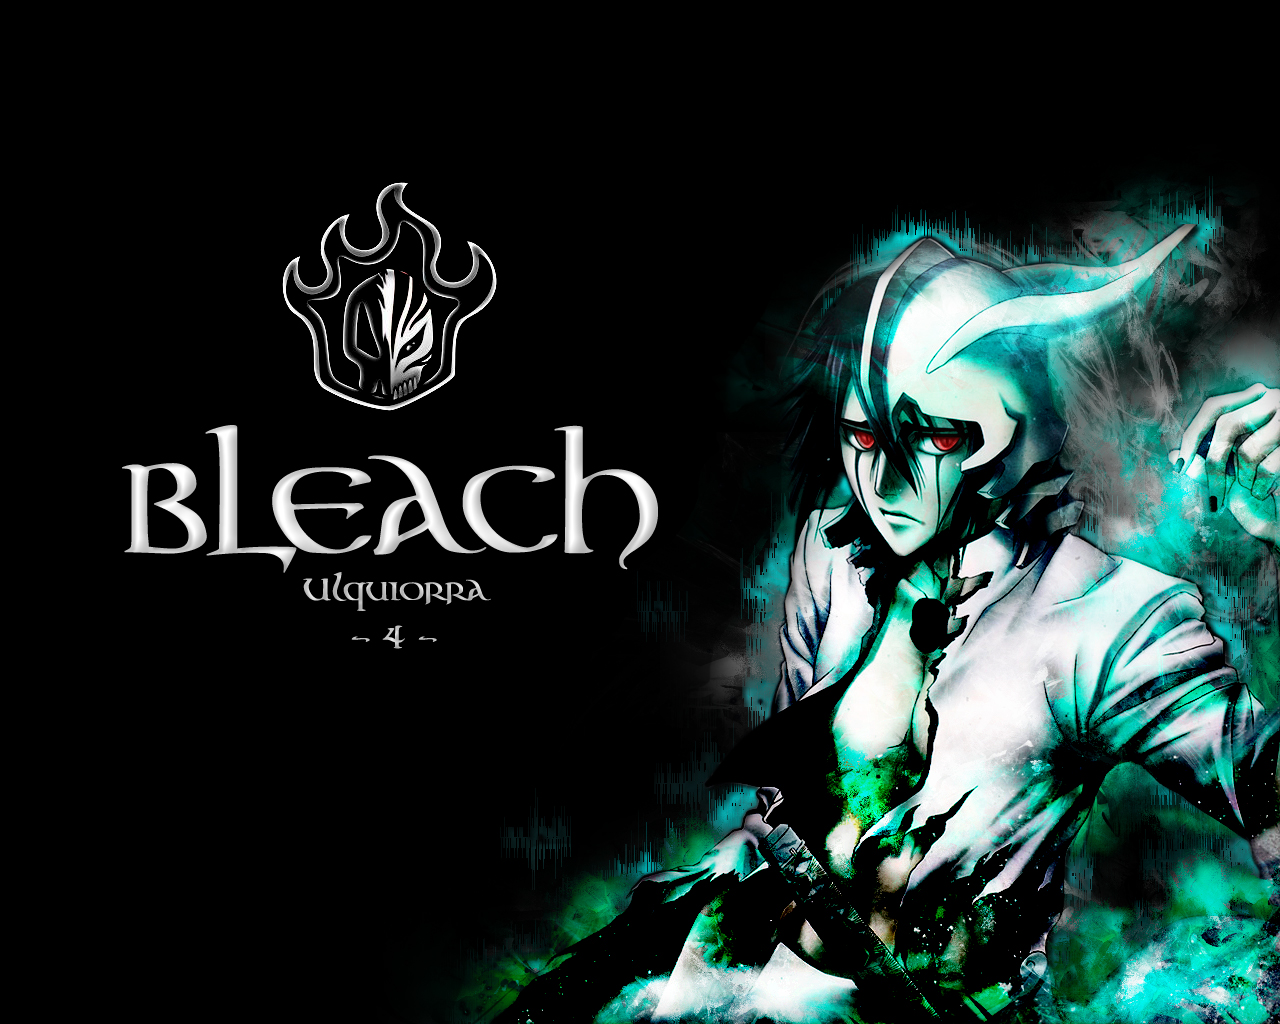 Bleach: Ulquiorra - Images